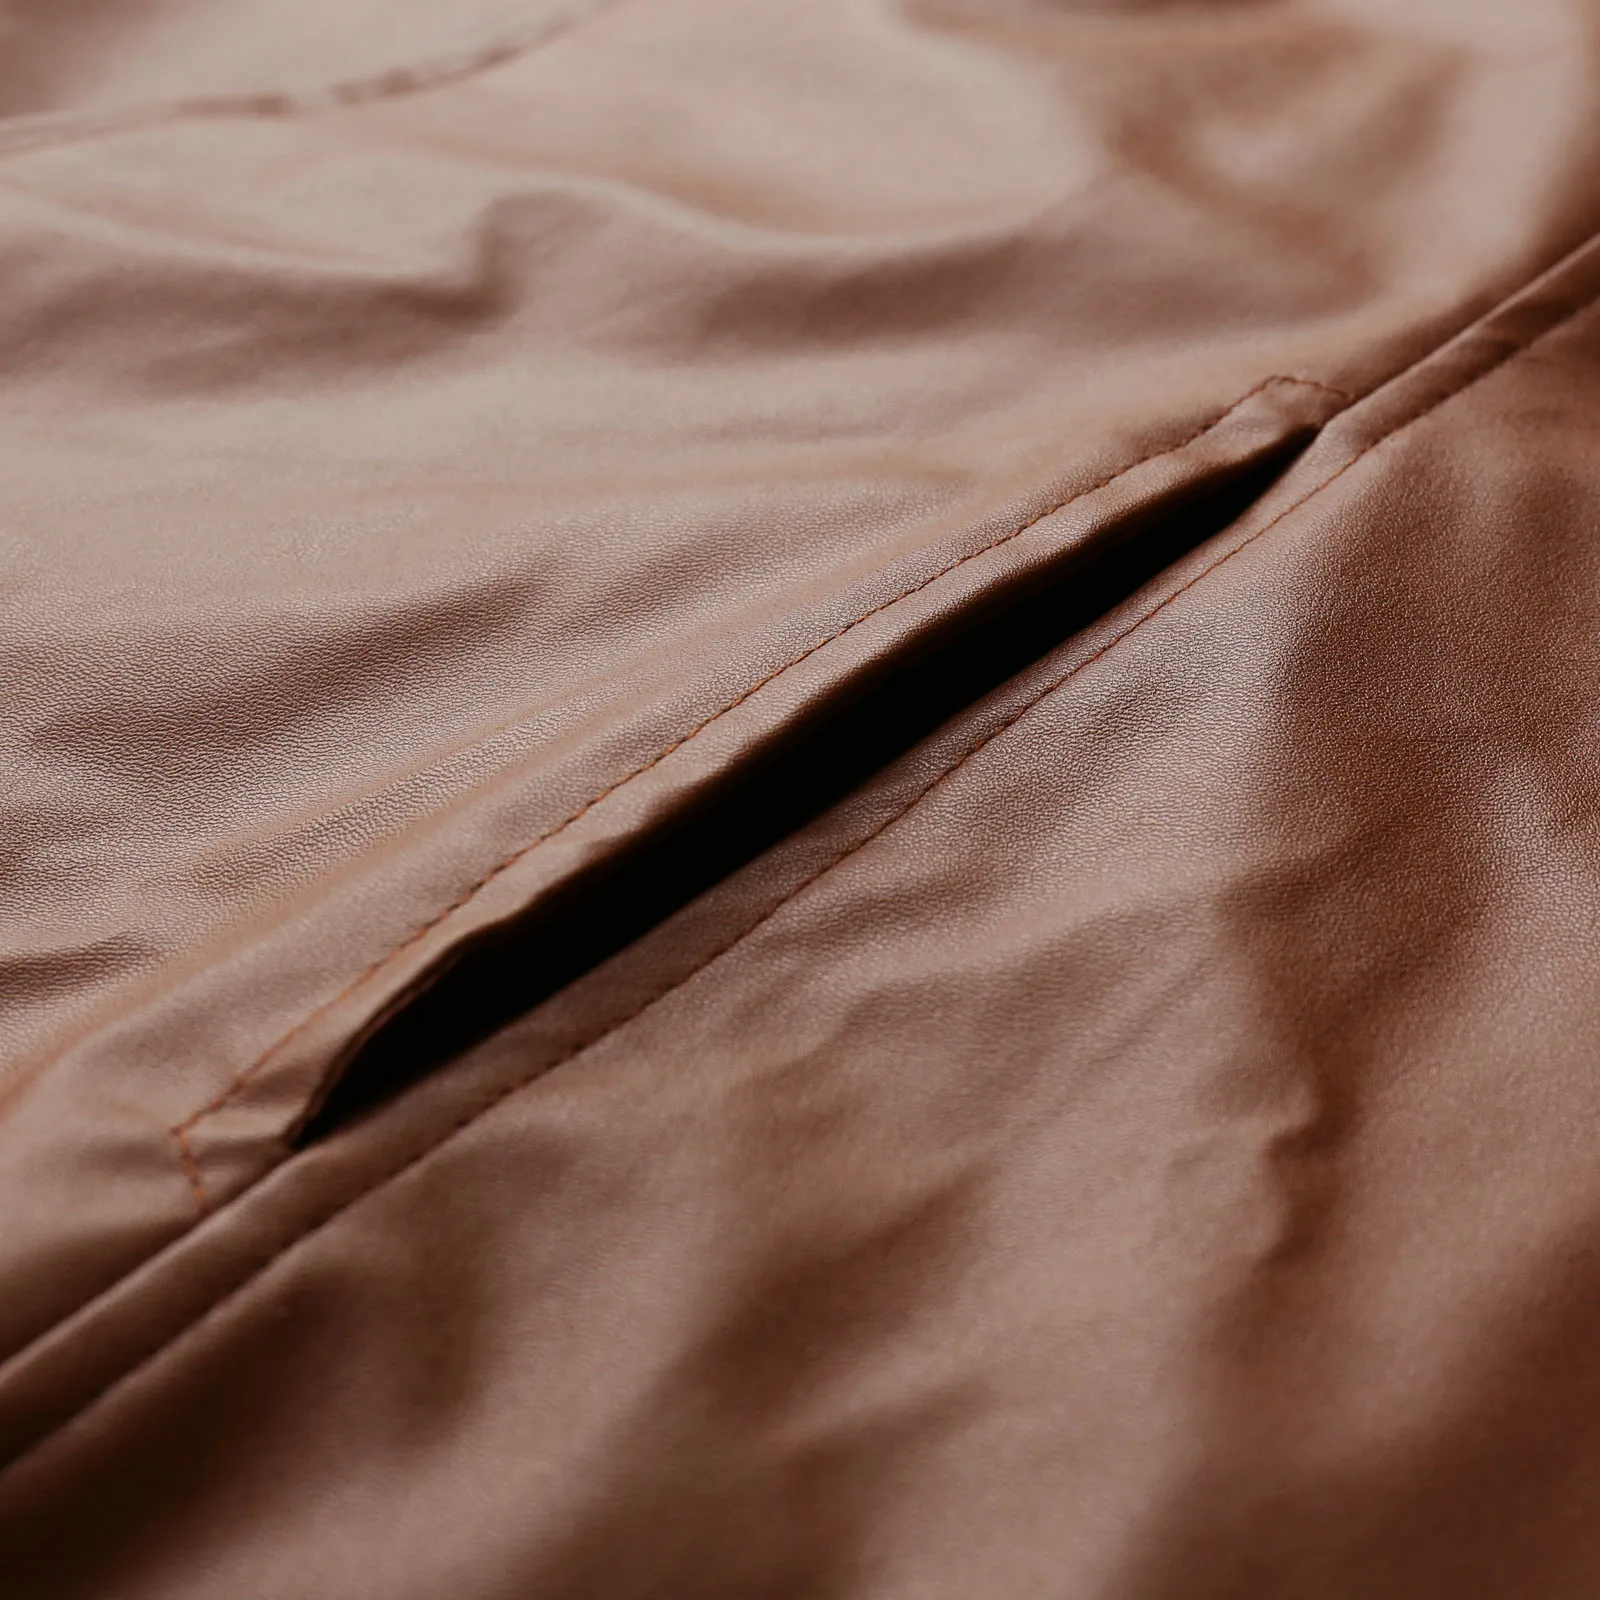 estilo britânico blusão bonito cor sólida fino-ajuste casaco longo plussize outwear